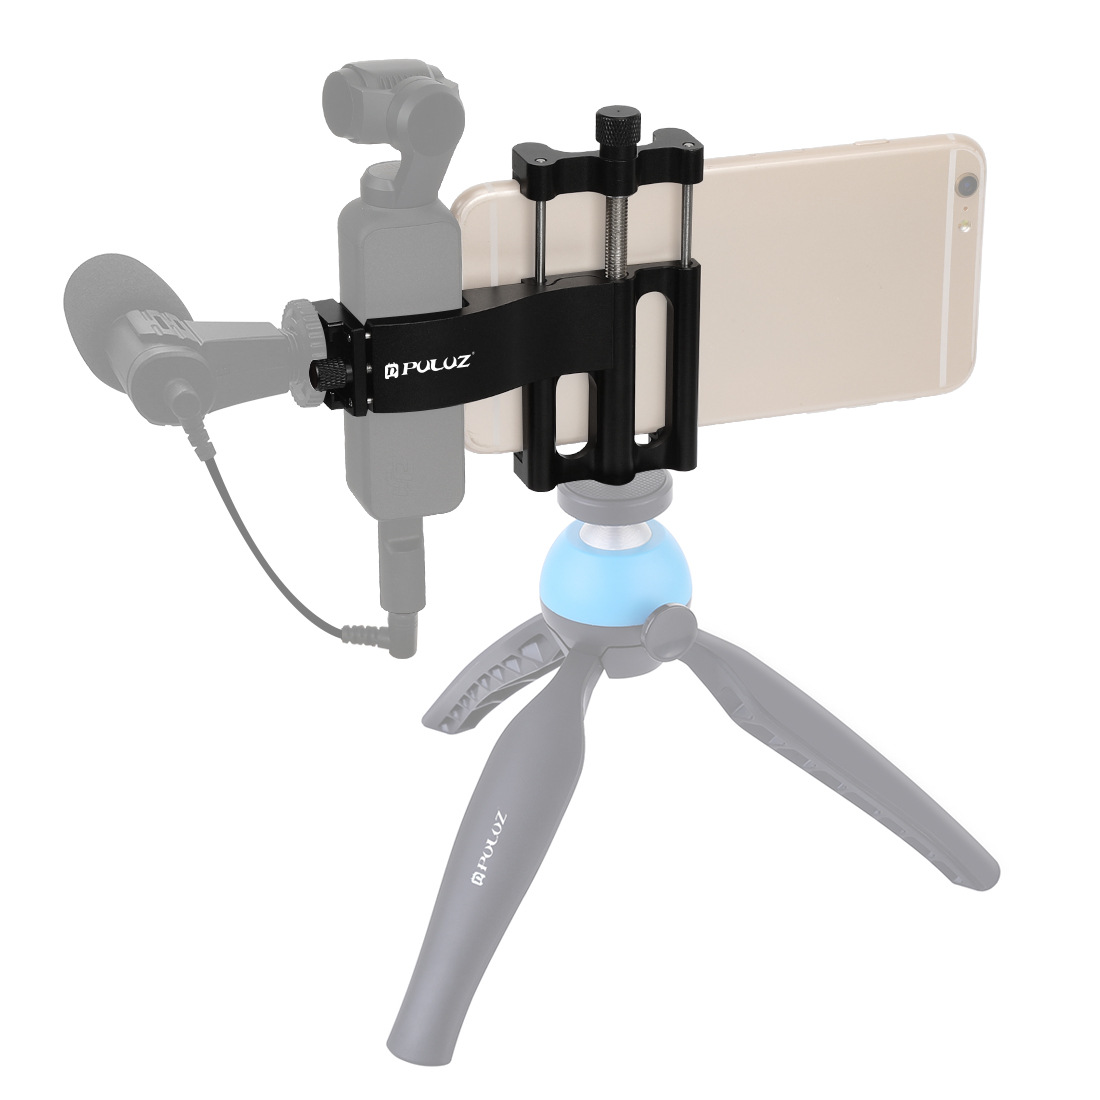 For Dji Osmo Pocket Camera Mobile Phone Holder Mount Set Fixed Stand Aluminum alloy Bracket